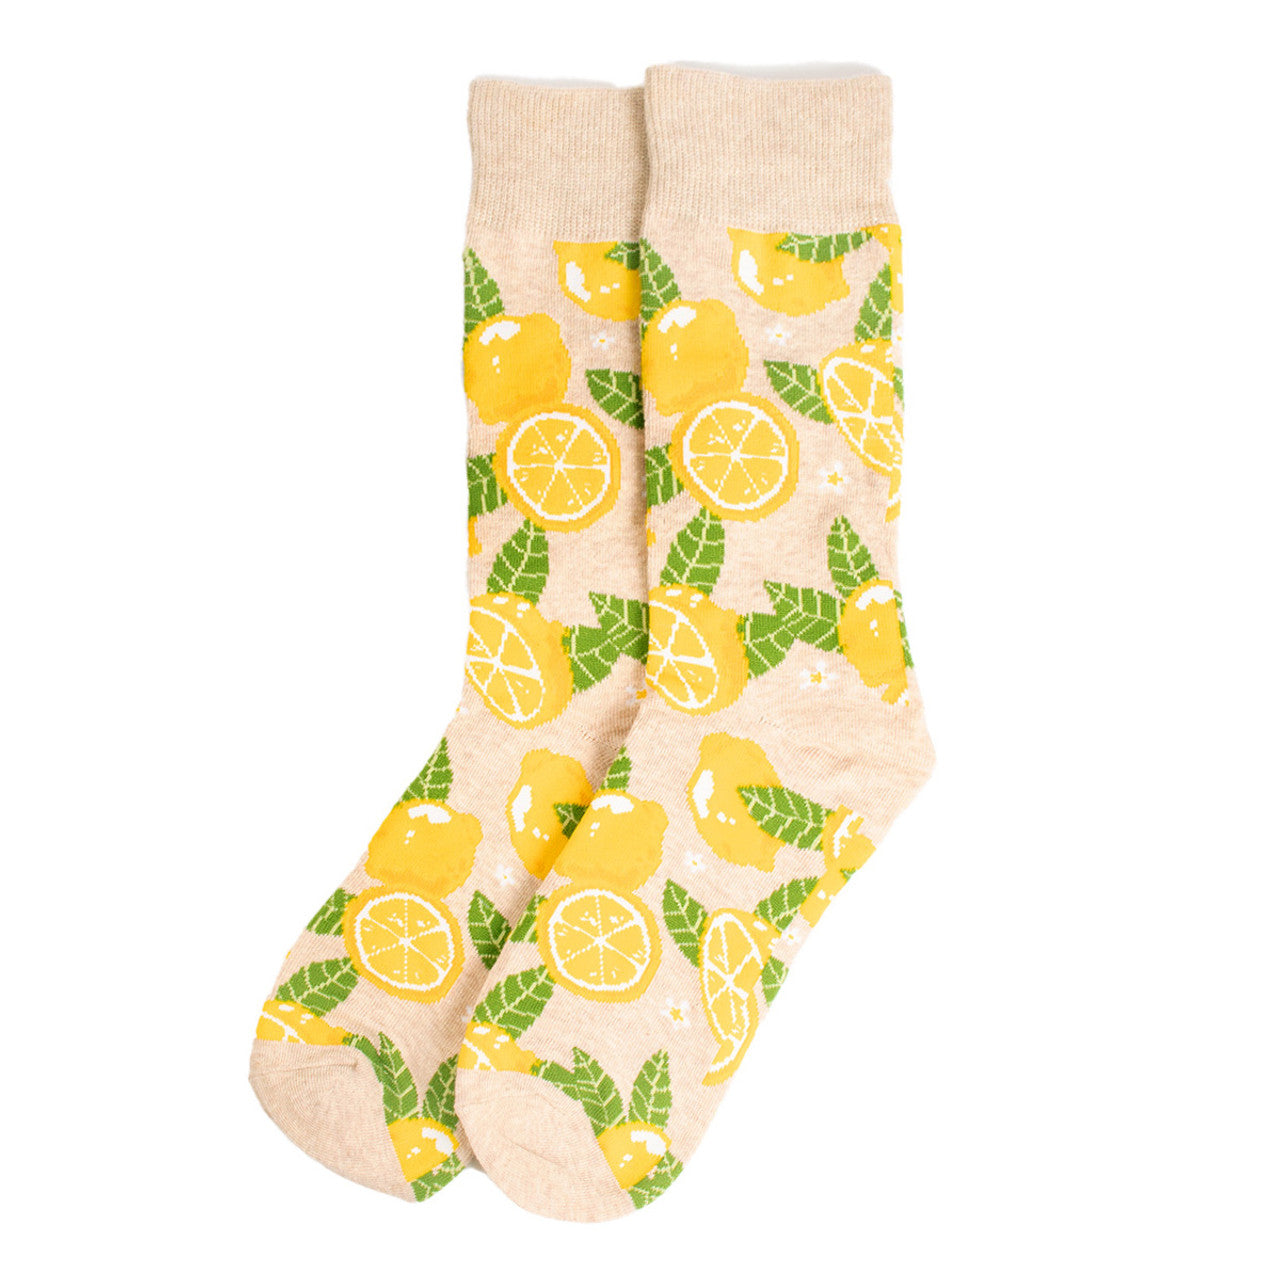 Funny Socks Men's Lemon Tree Novelty Socks Funny Socks Dad Gifts Cool Socks Funny Groomsmen